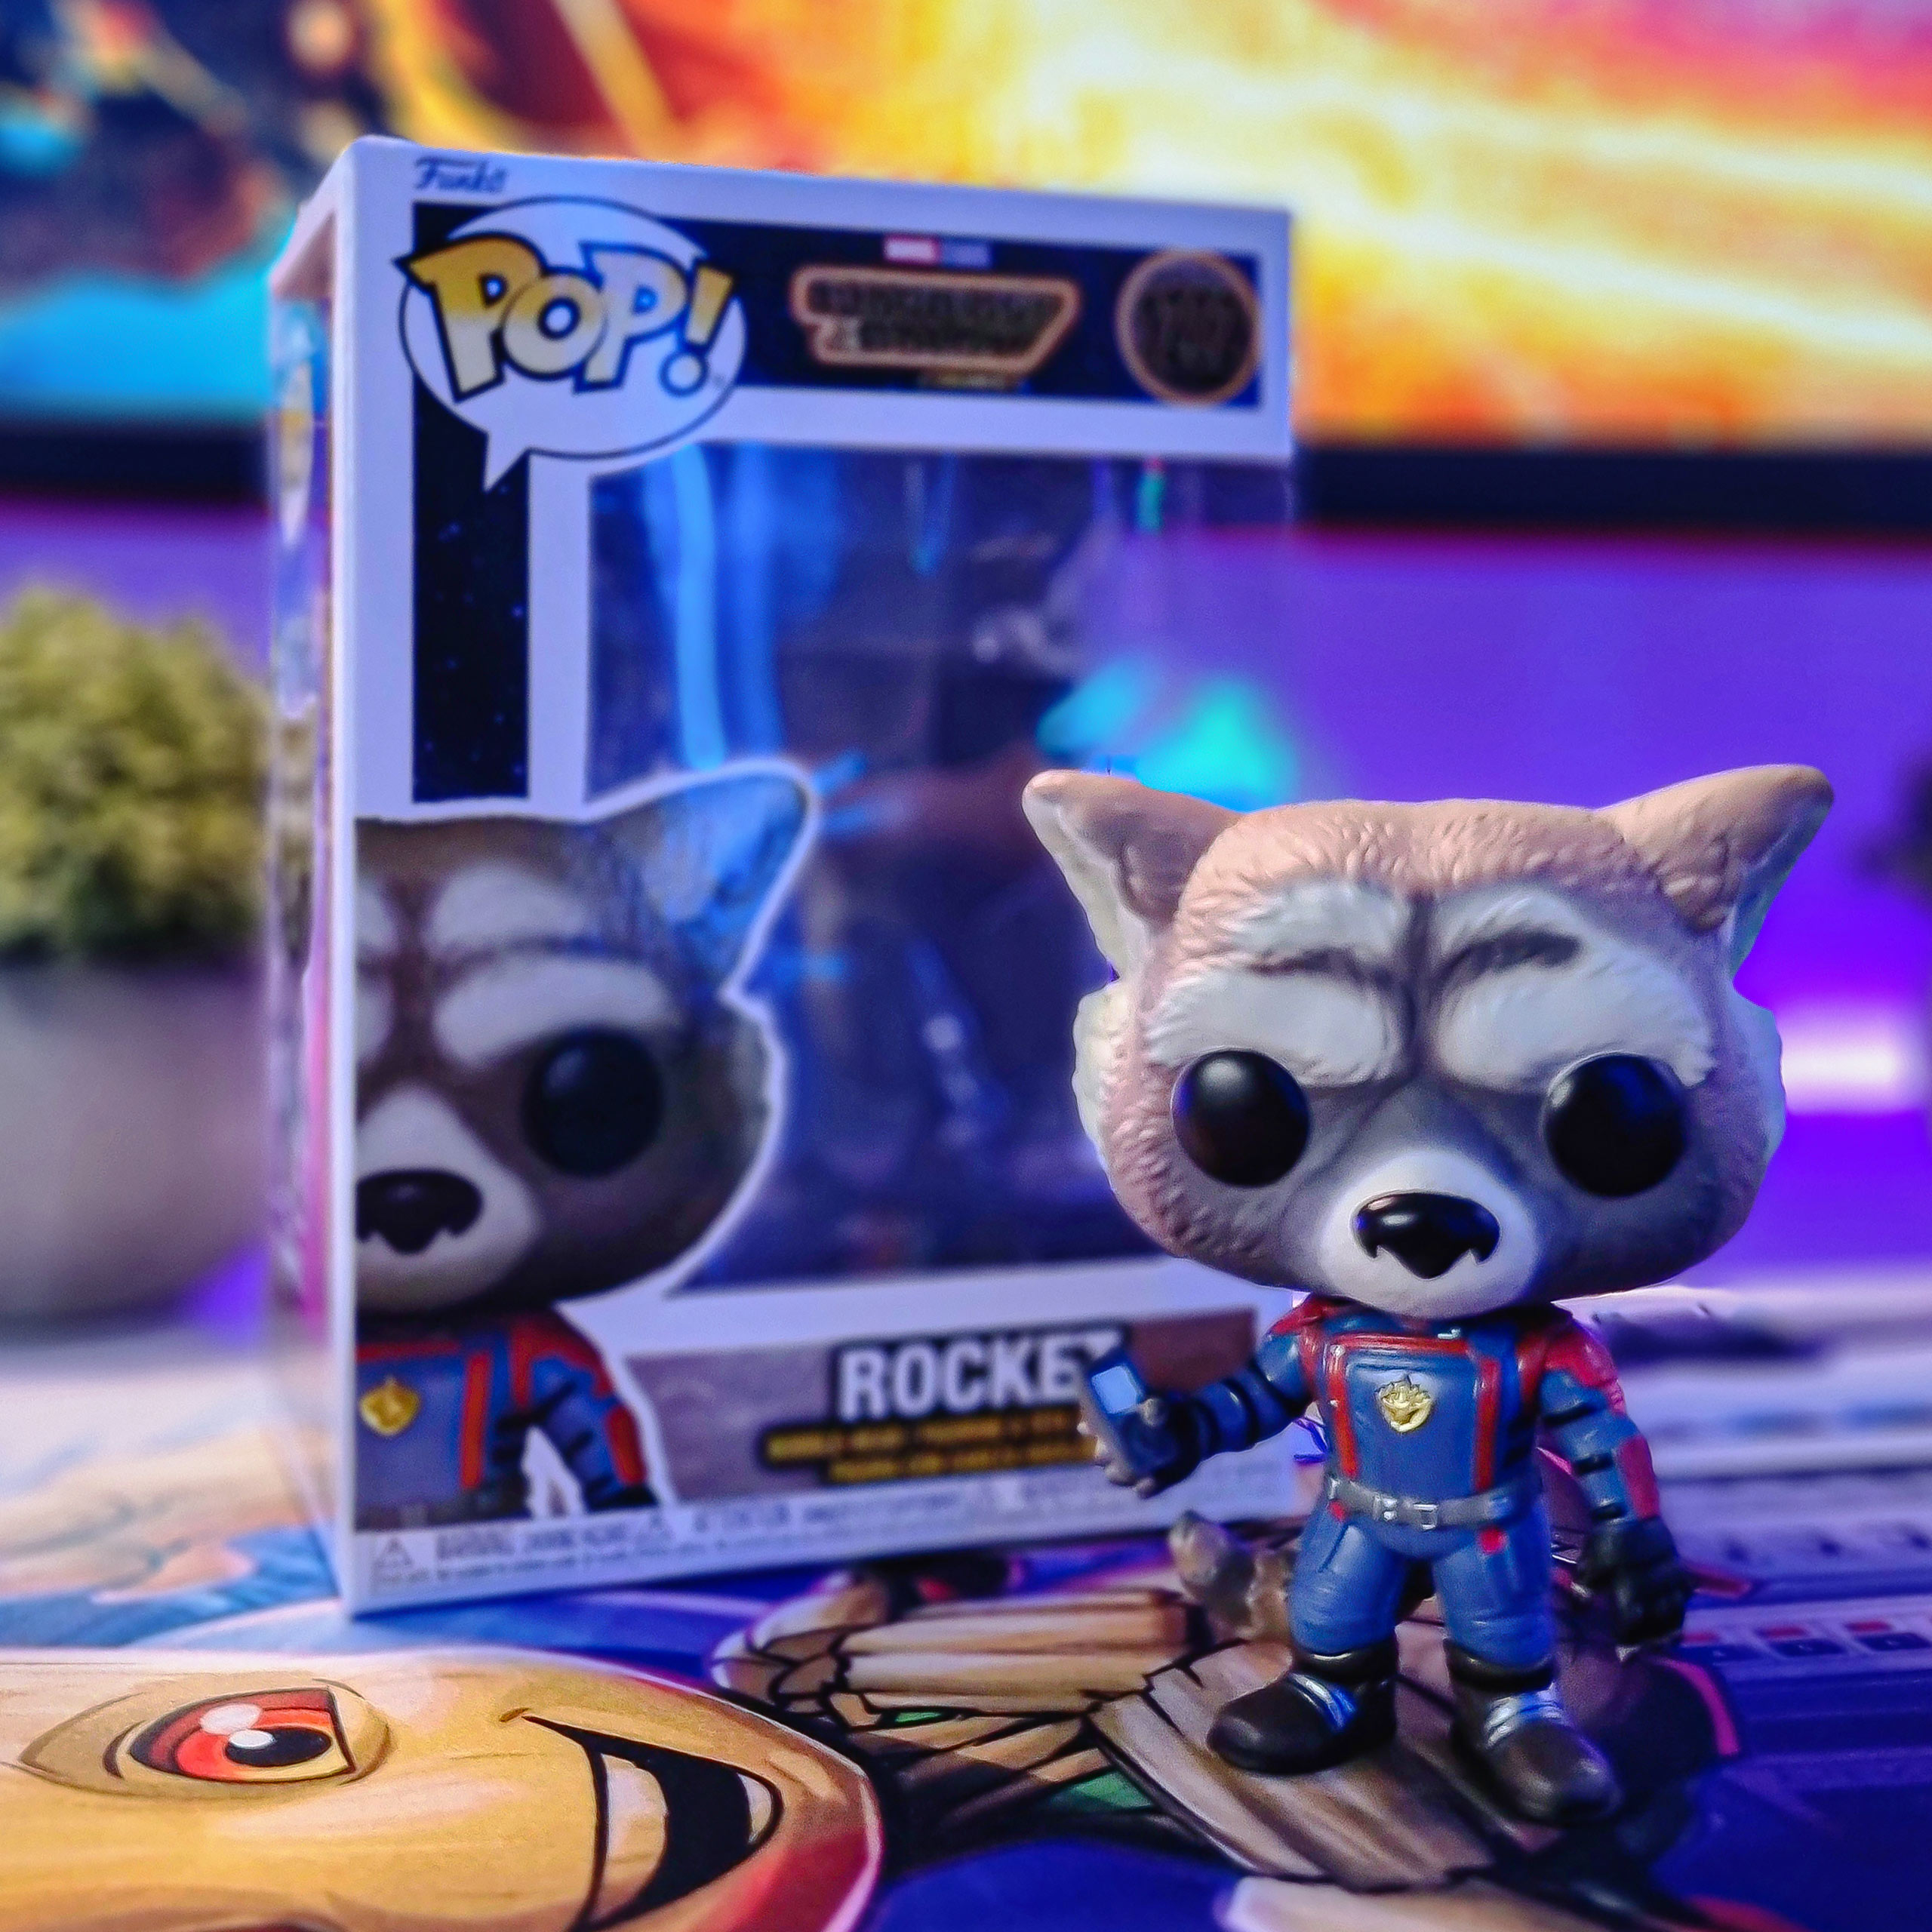 Guardians of the Galaxy - Rocket Raccoon Funko Pop Wackelkopf-Figur